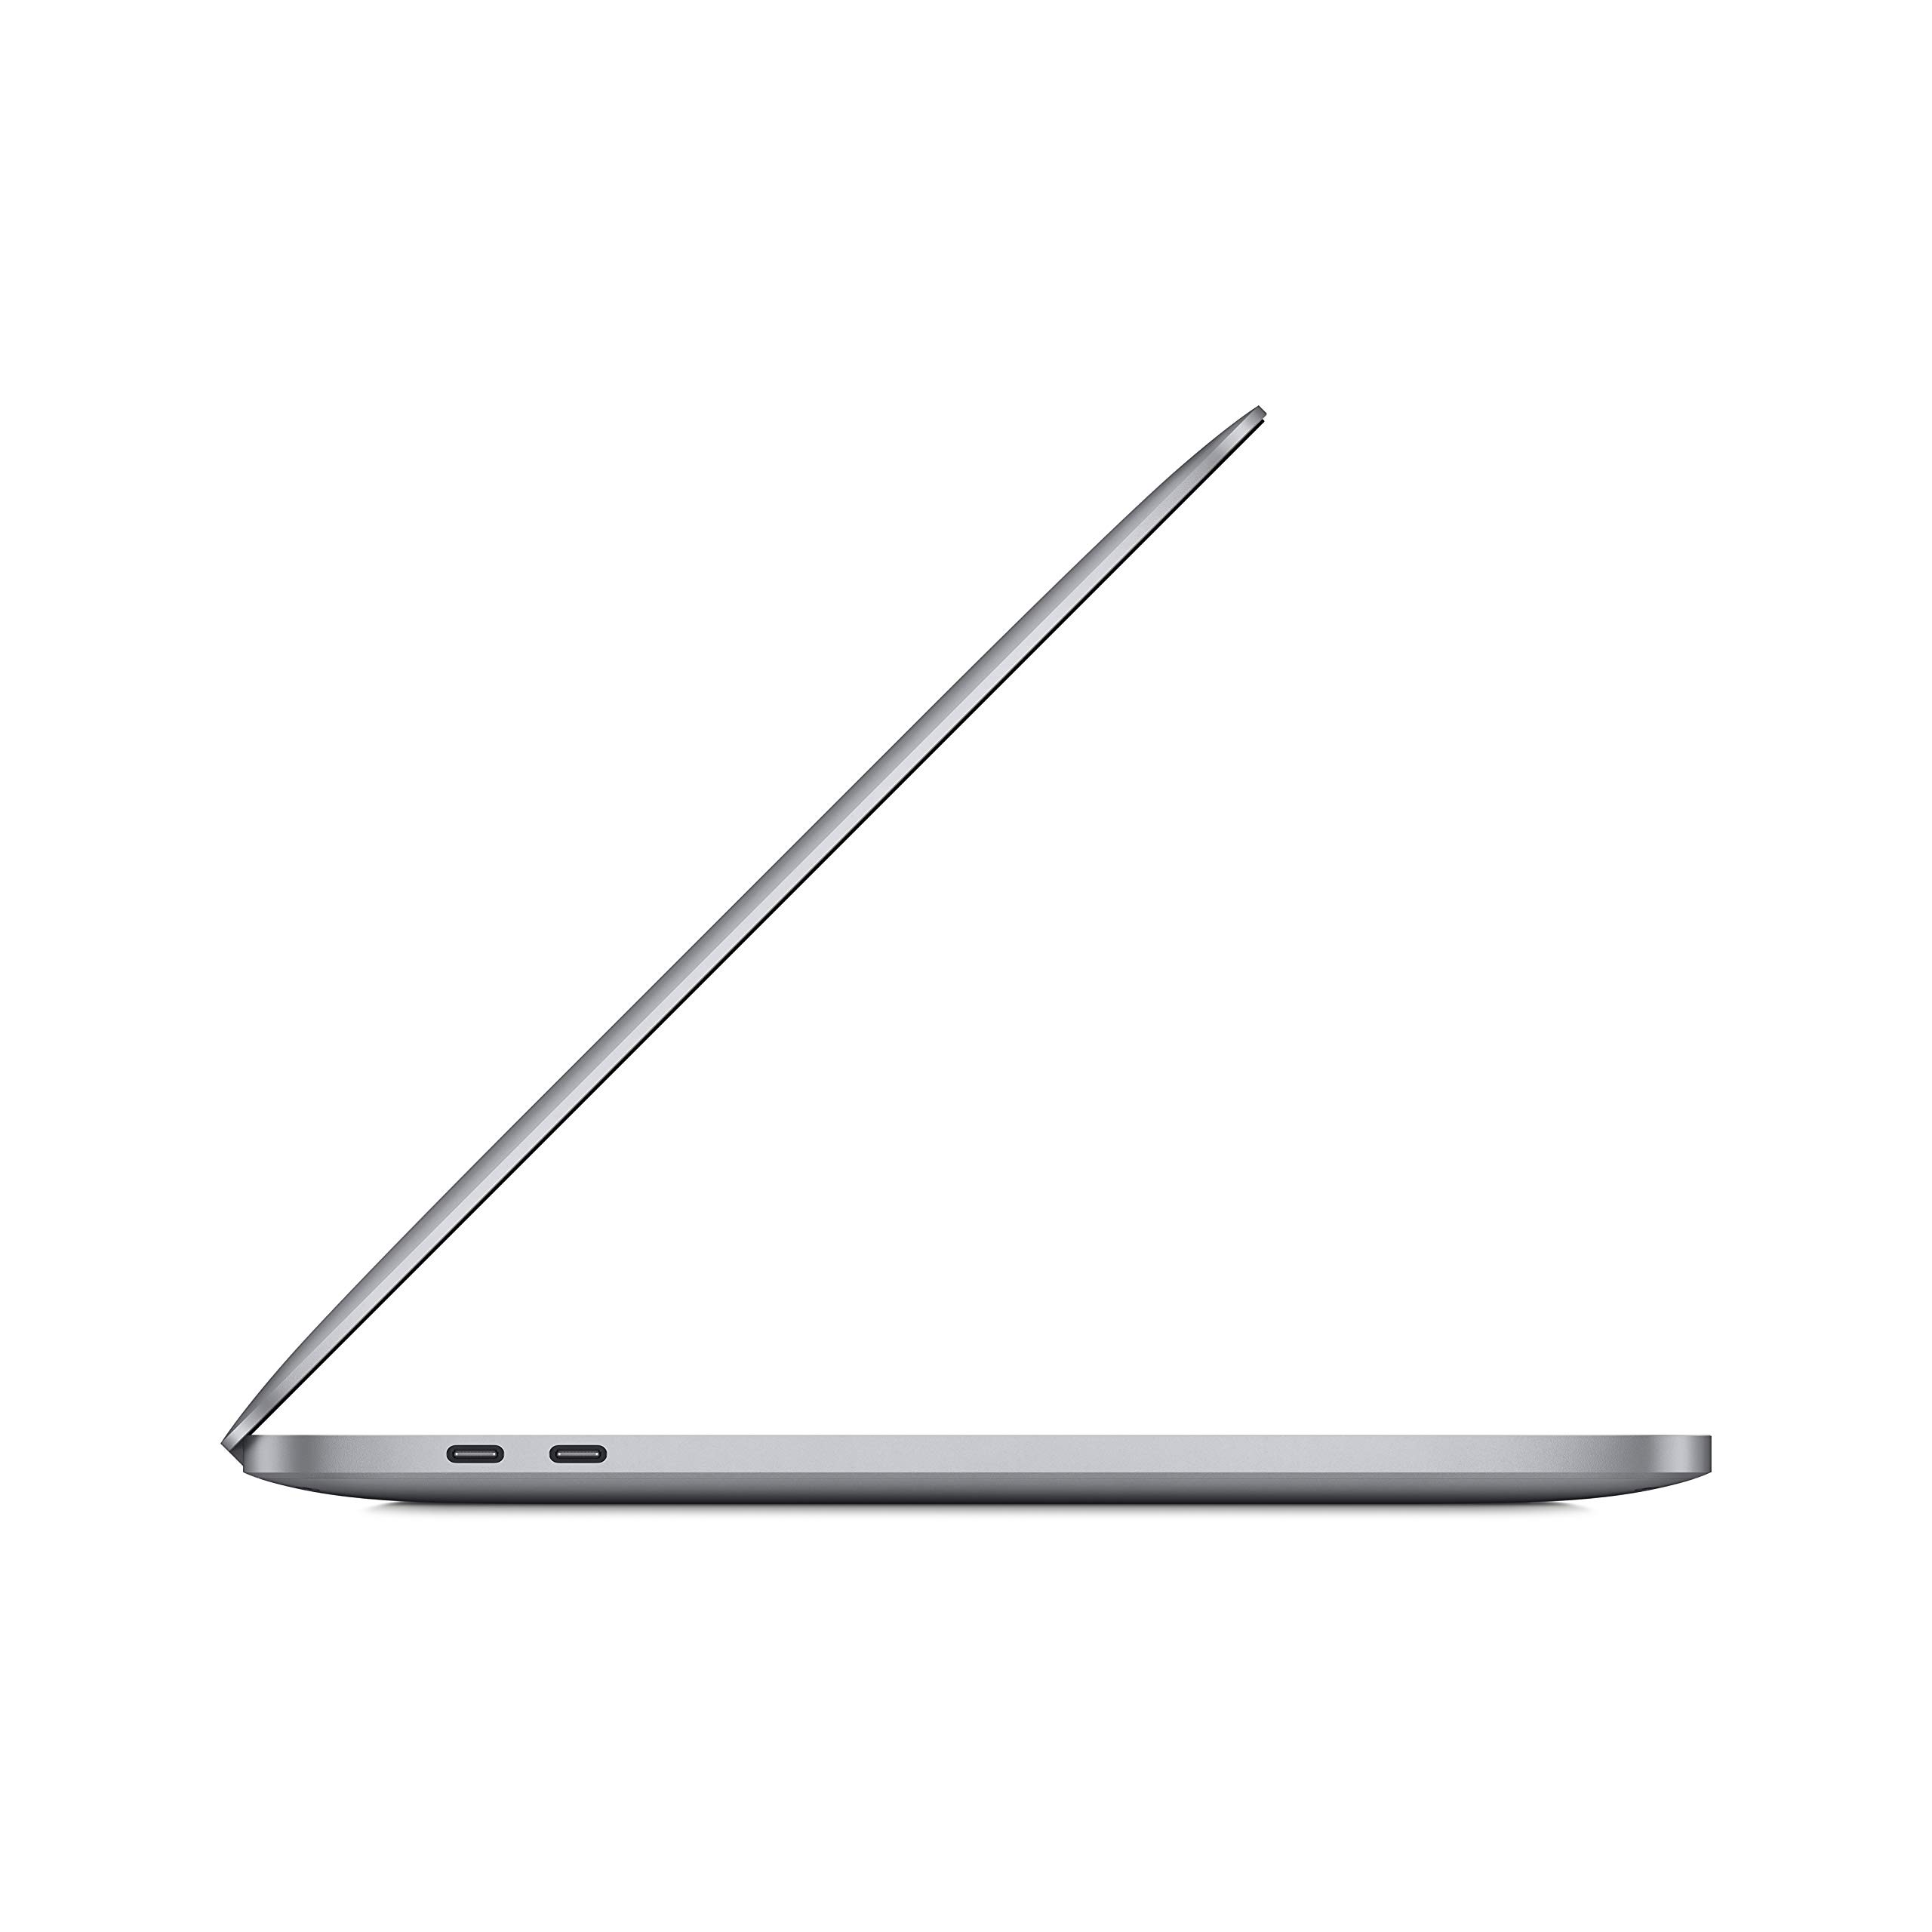 Apple 2020 MacBook Pro M1 Chip (13-inch, 8GB RAM, 256GB SSD Storage) - Space Gray